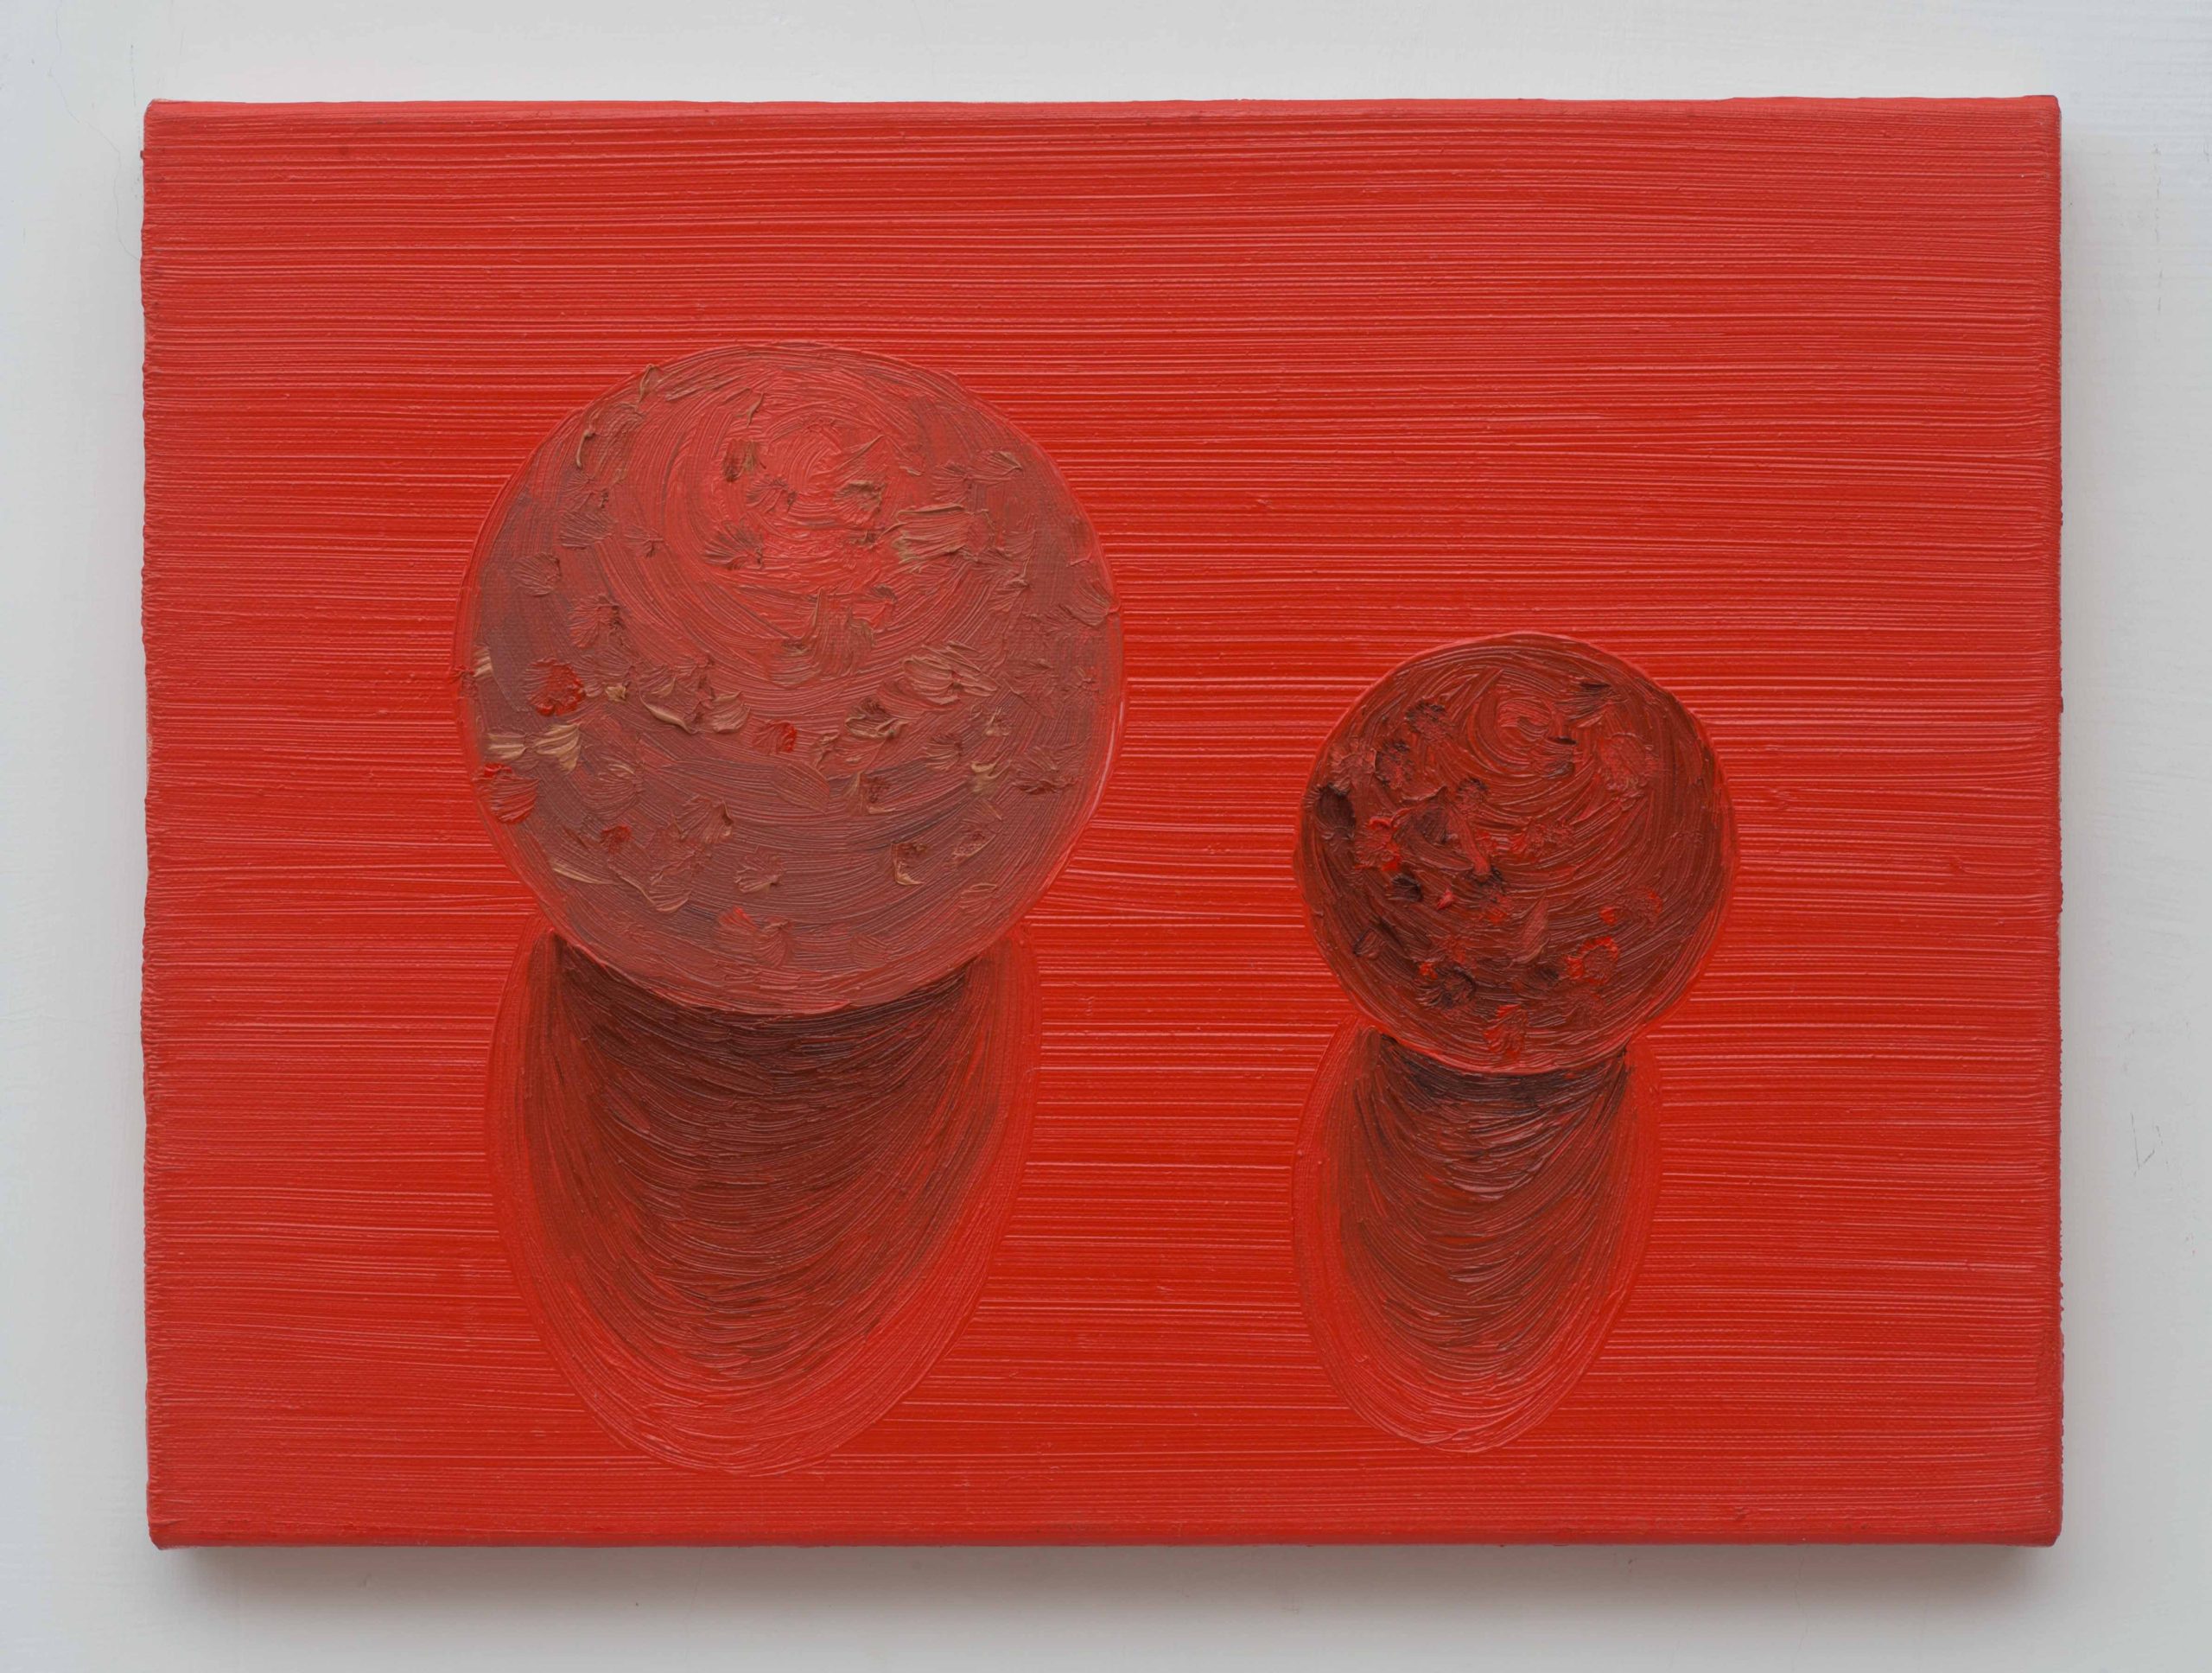 Katalin KÁLDI: Marbles, 2002, oil on canvas, 30 x 40 cm